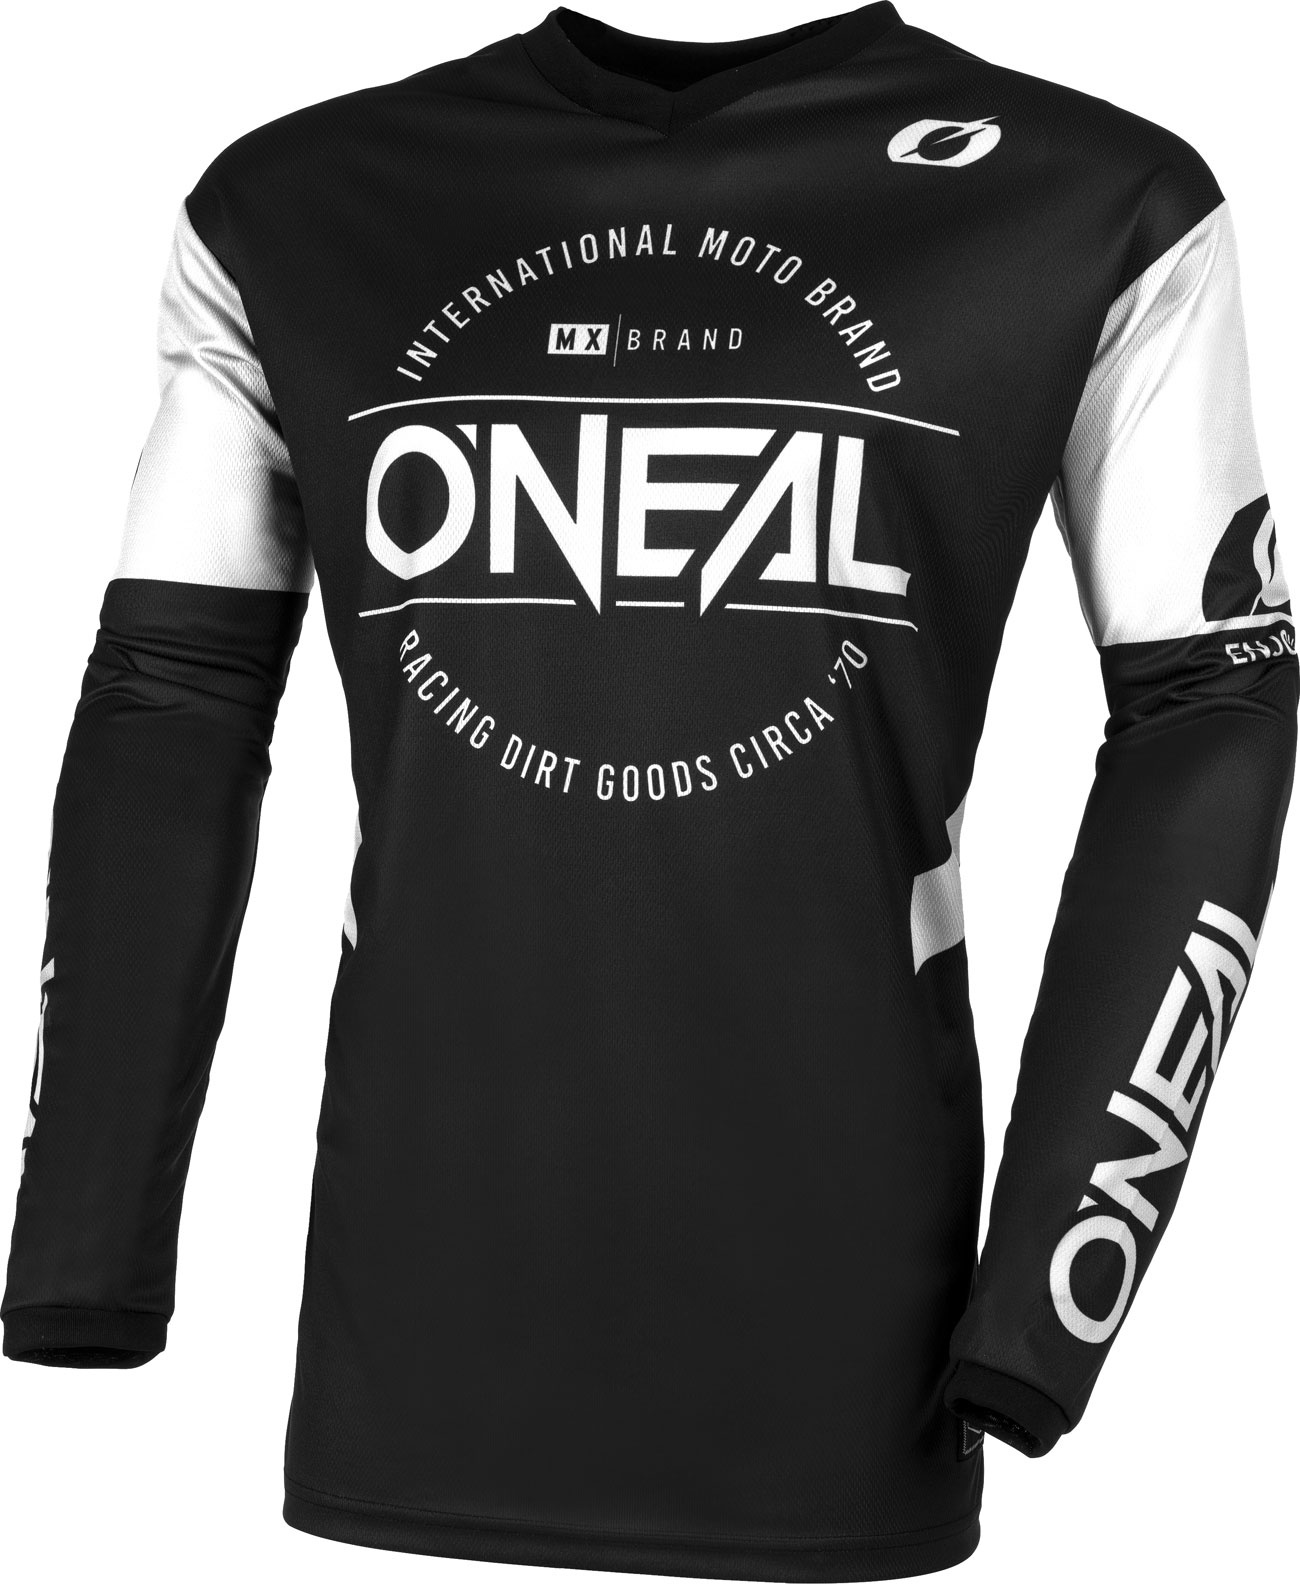 ONeal Element Brand S23, jersey - Noir/Blanc - L